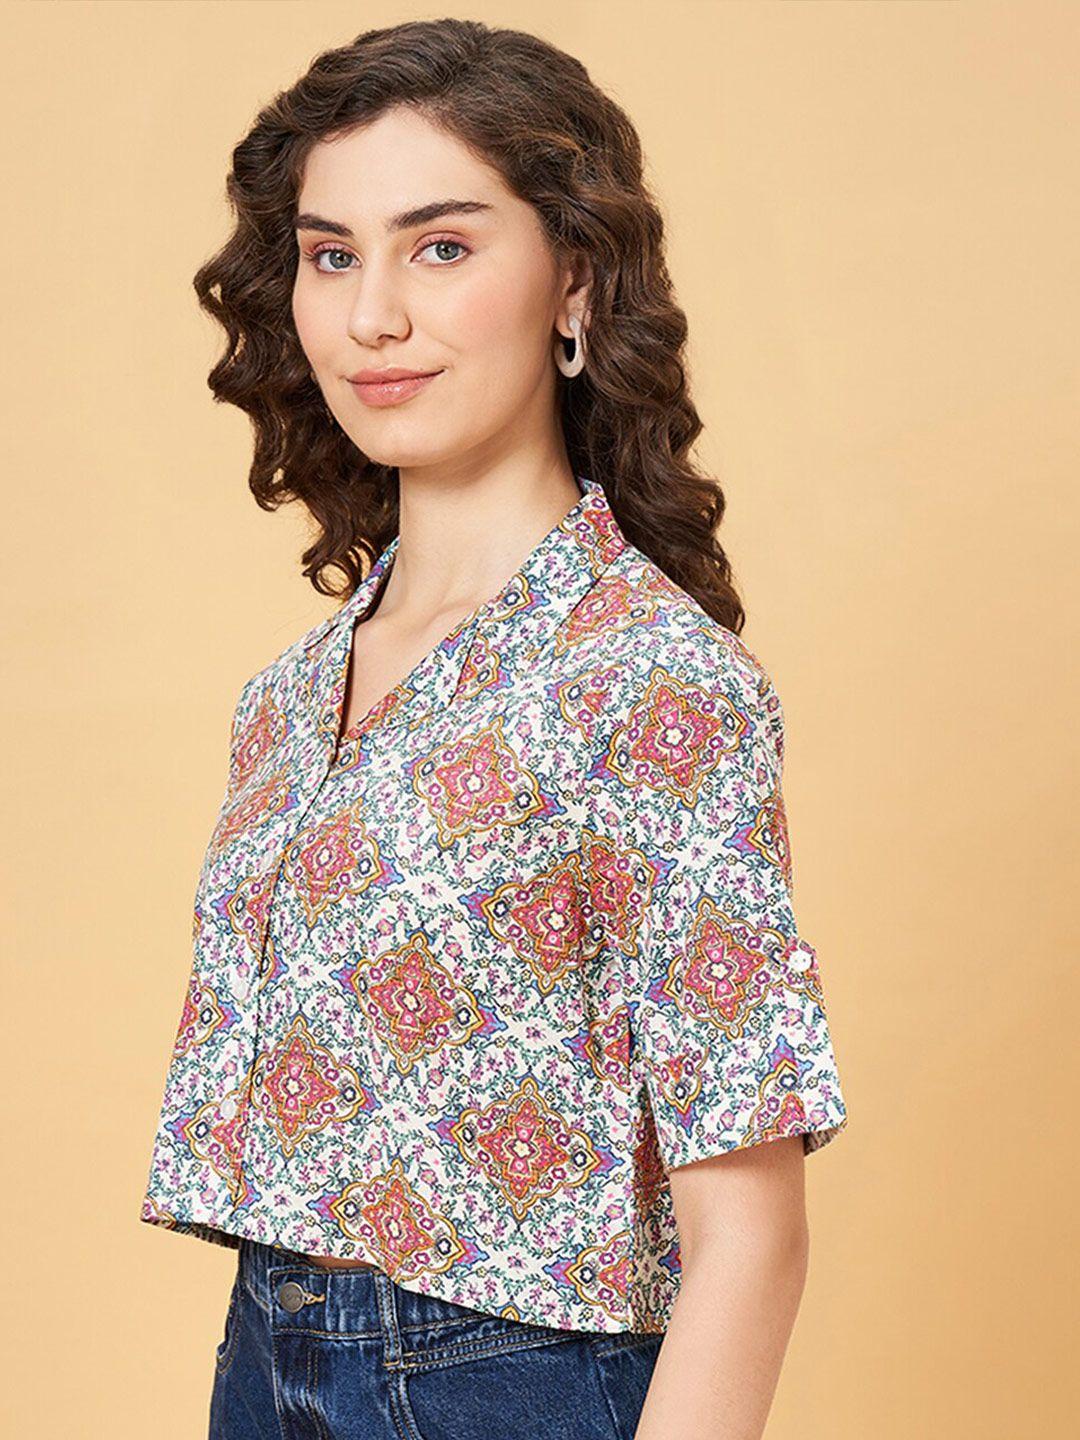 yu by pantaloons floral print cotton shirt style top